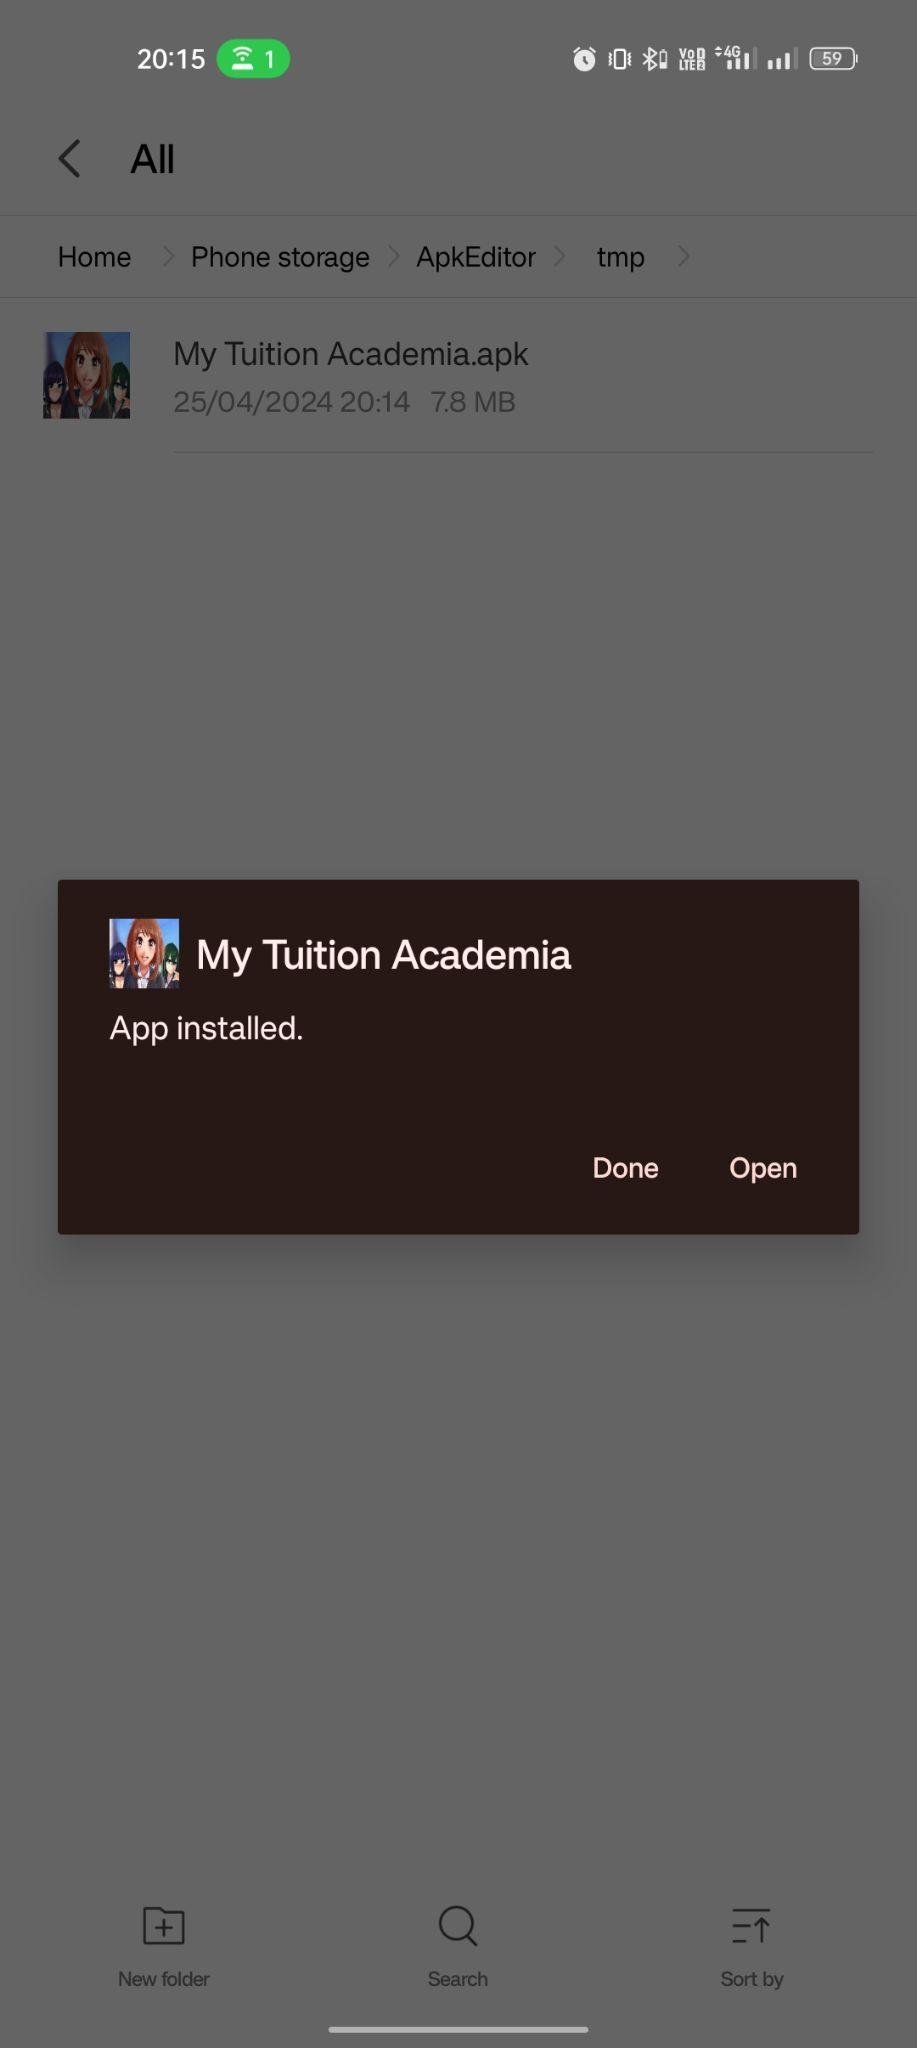 My Tuition Academia apk installed